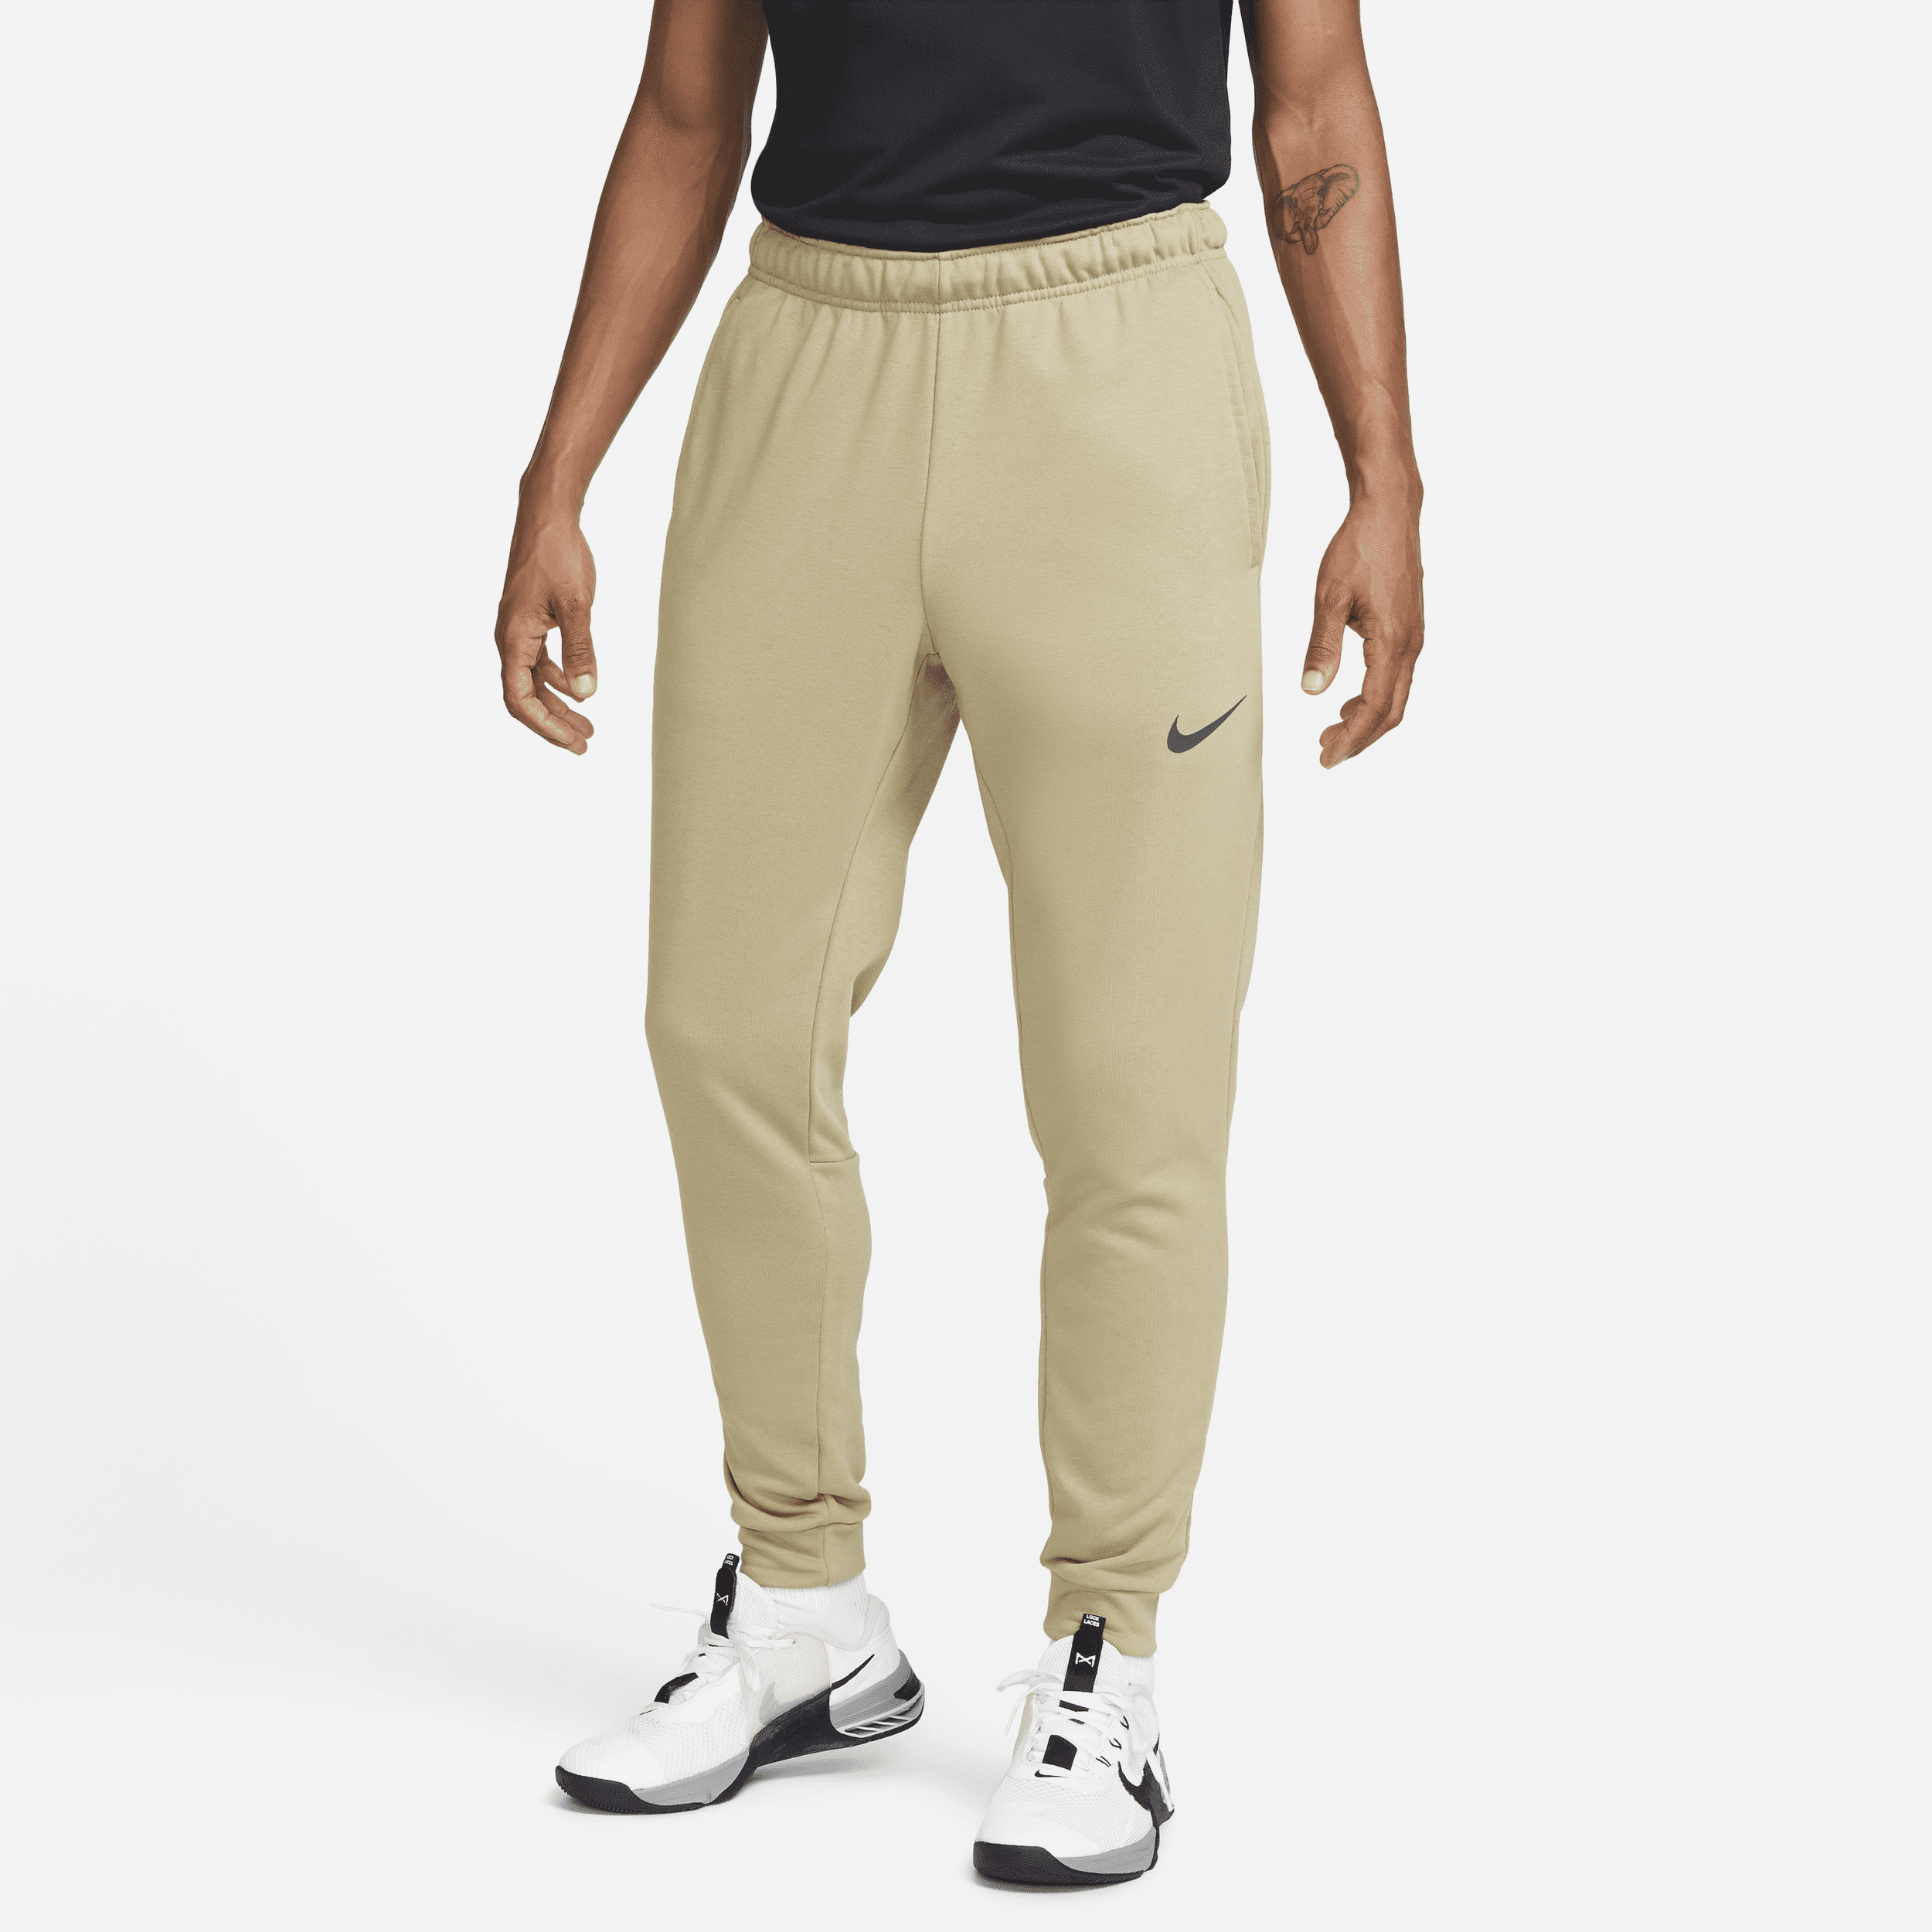 Nike Dry Pantalón Dri-FIT ceñido de tejido Fleece - Hombre - Marrón